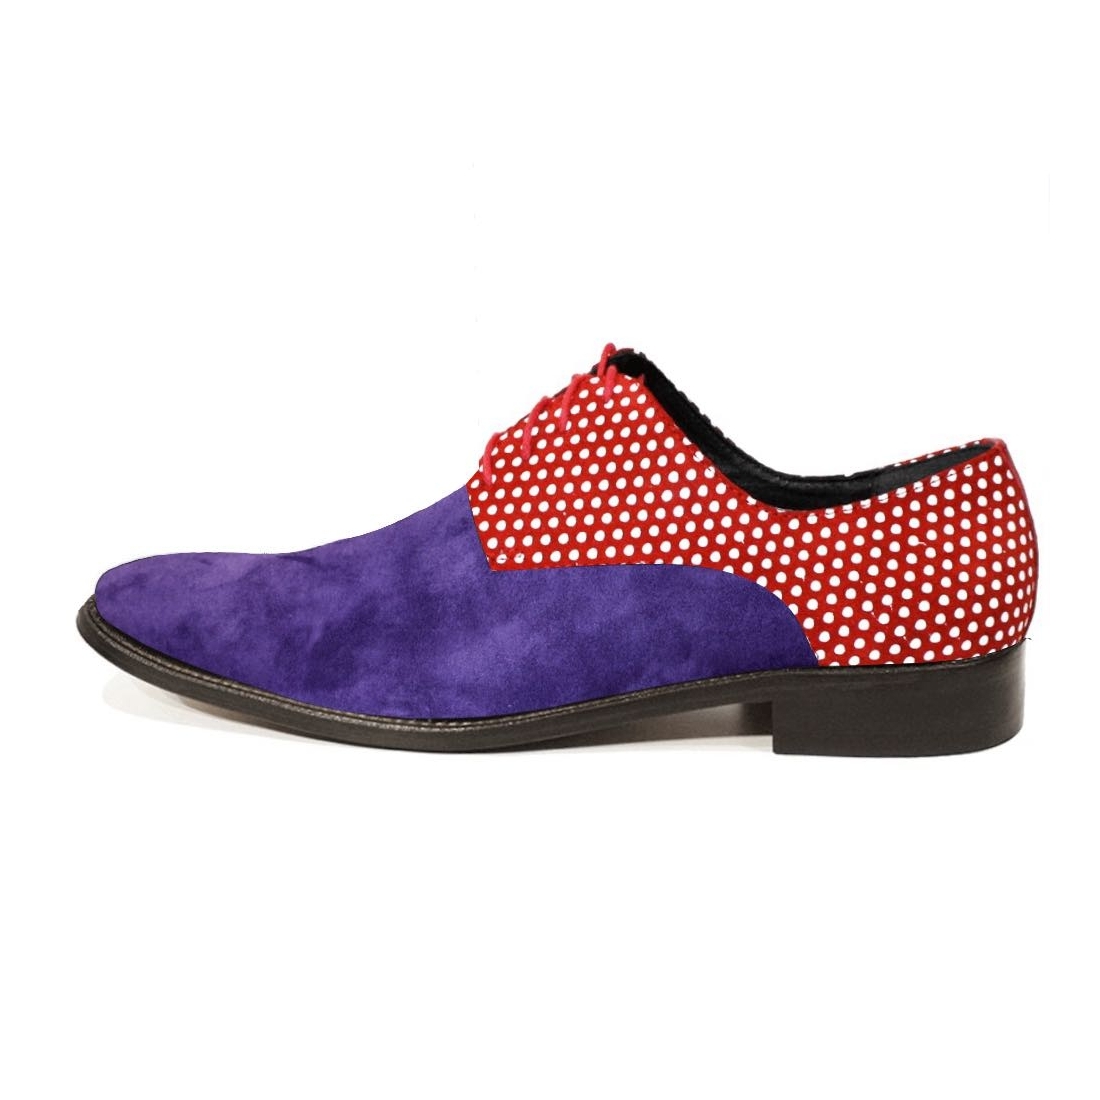 Modello Puntitto - クラシックシューズ - Handmade Colorful Italian Leather Shoes